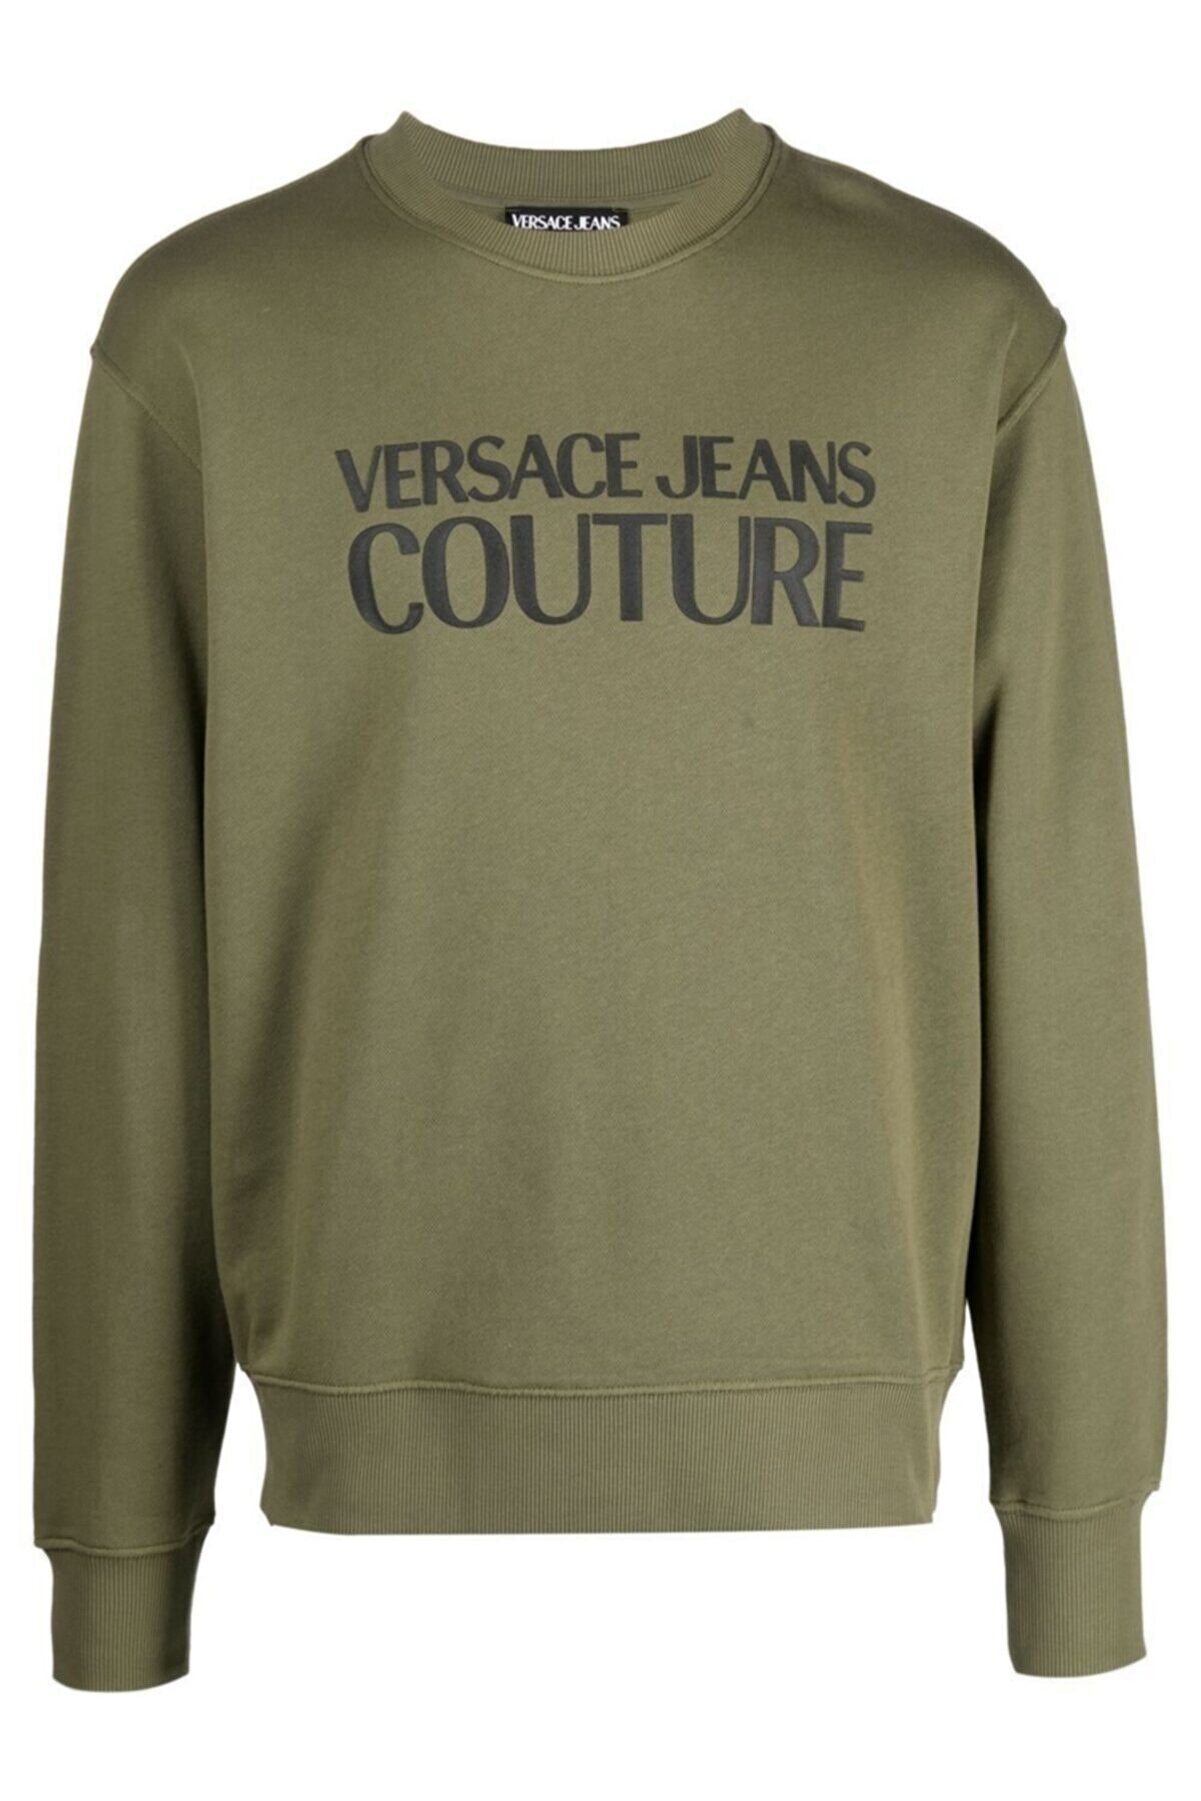 Versace Mat Logo Baskı Jeans Couture Haki Sweatshirt